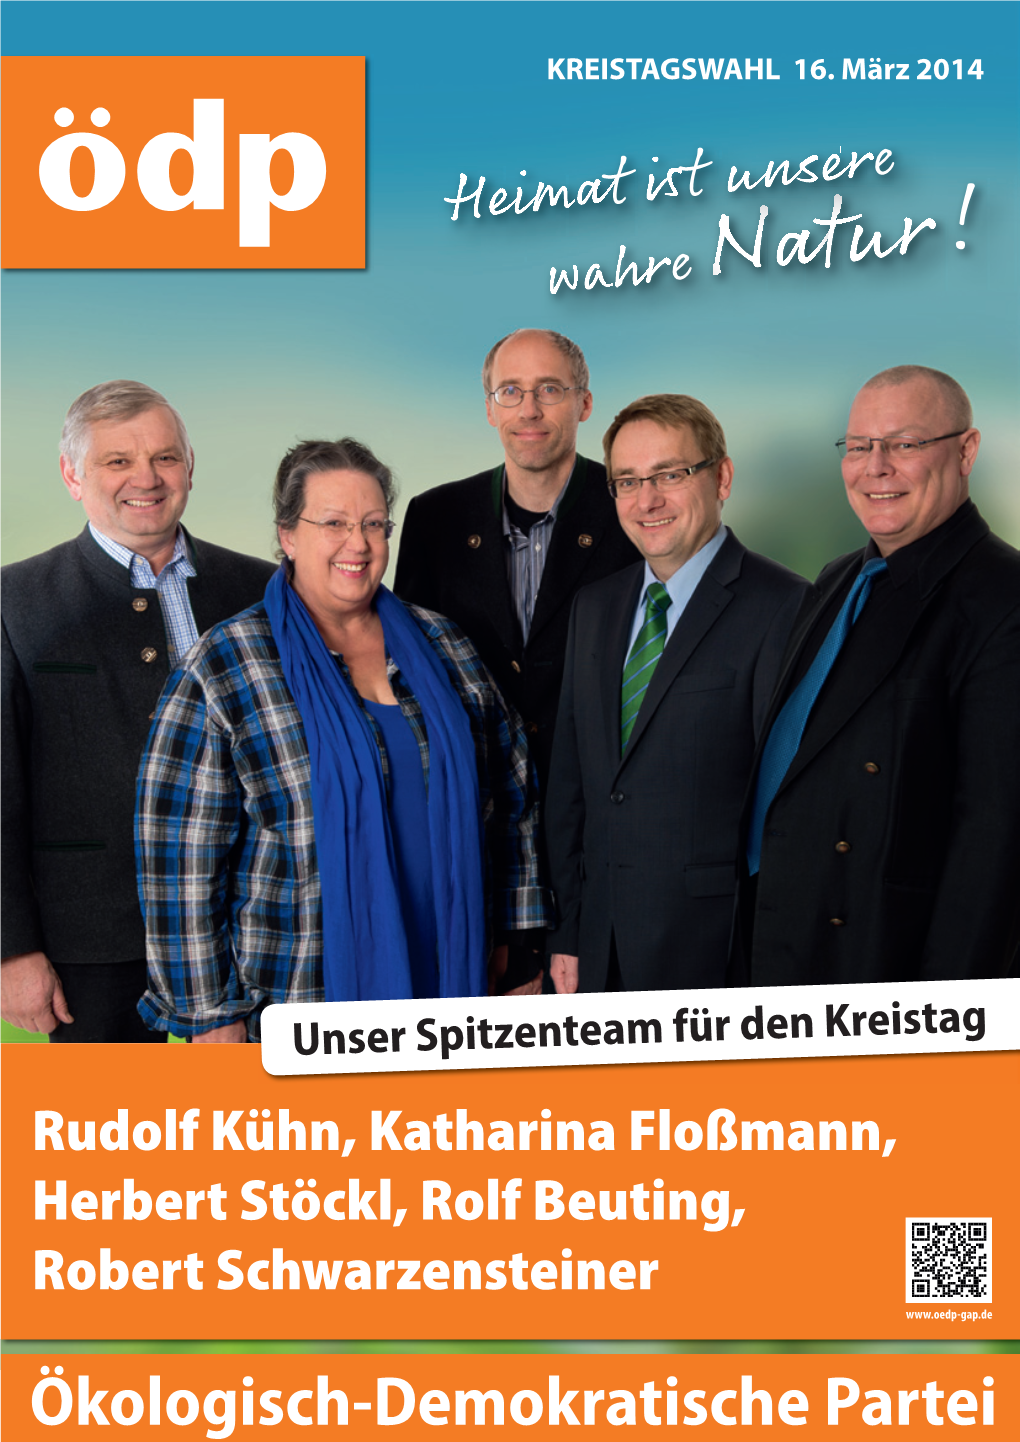 Rudolf Kühn, Katharina Floßmann, Herbert Stöckl, Rolf Beuting, Robert Schwarzensteiner